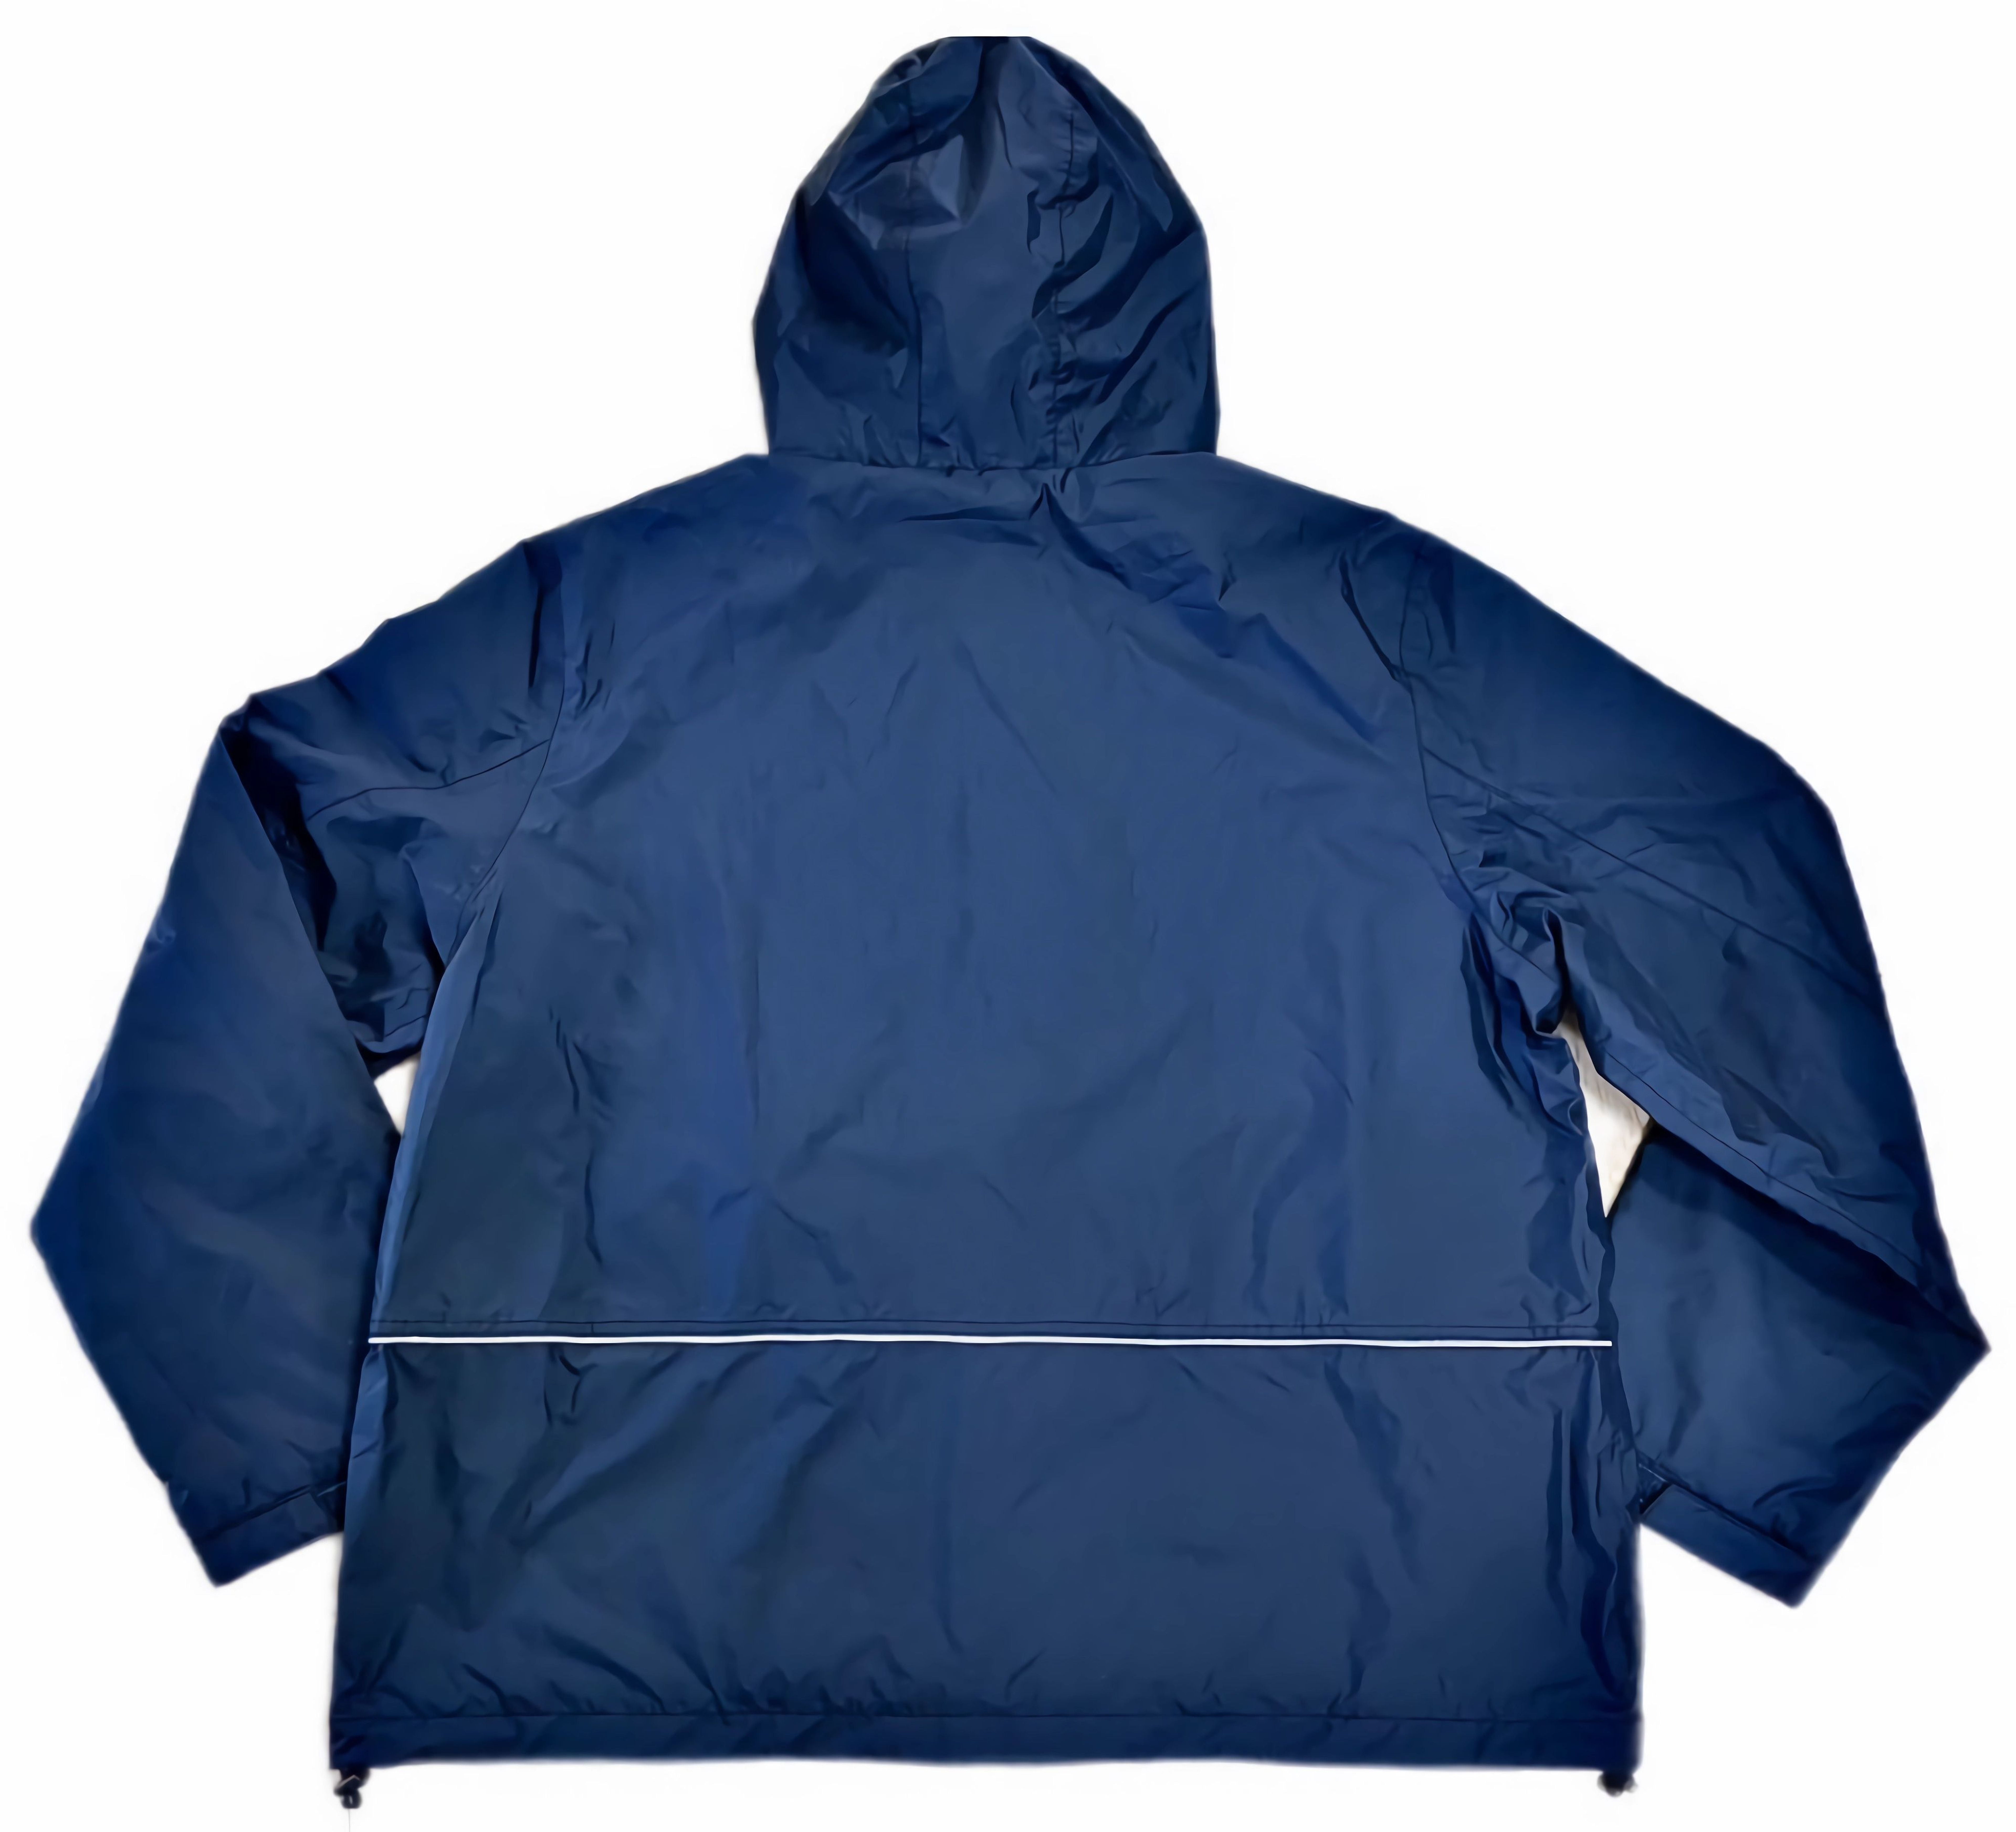 Adult Breathable Rain Jacket,Ozark Trail,Unisex,Set-in Long Sleeve,  Clothing Size: M/L (38-44),Polyester Rain Jacket,Men's & Women's 